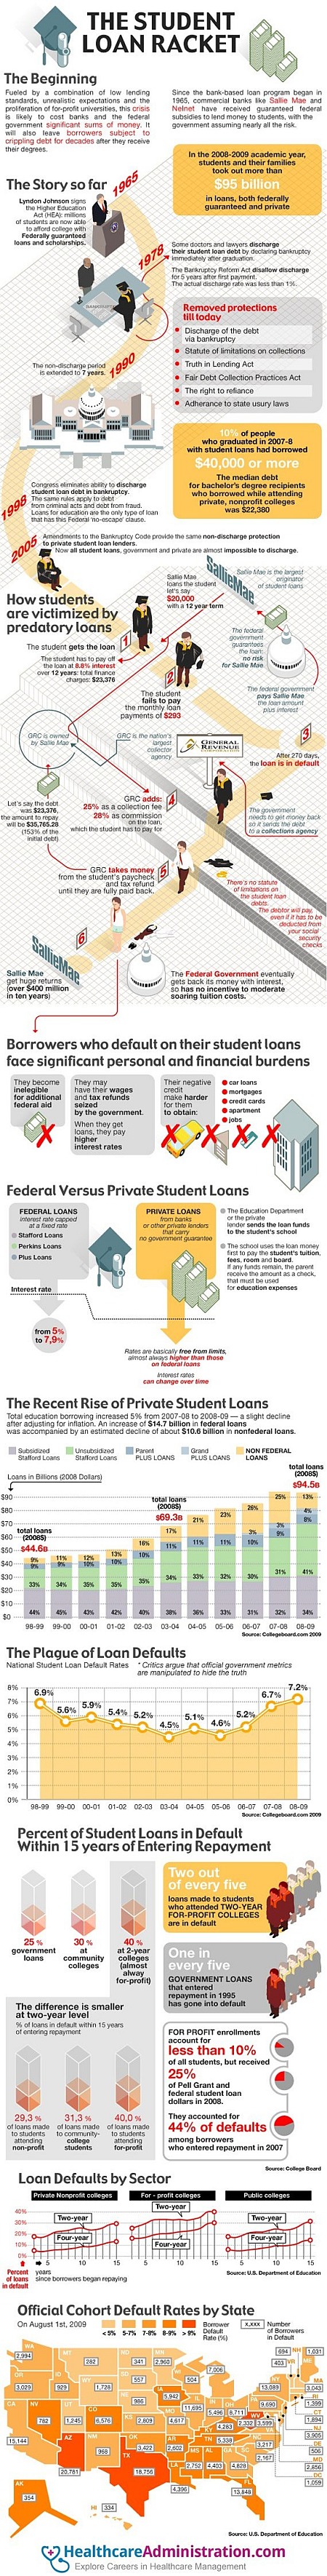 Exposing the Student Loan Racket in America